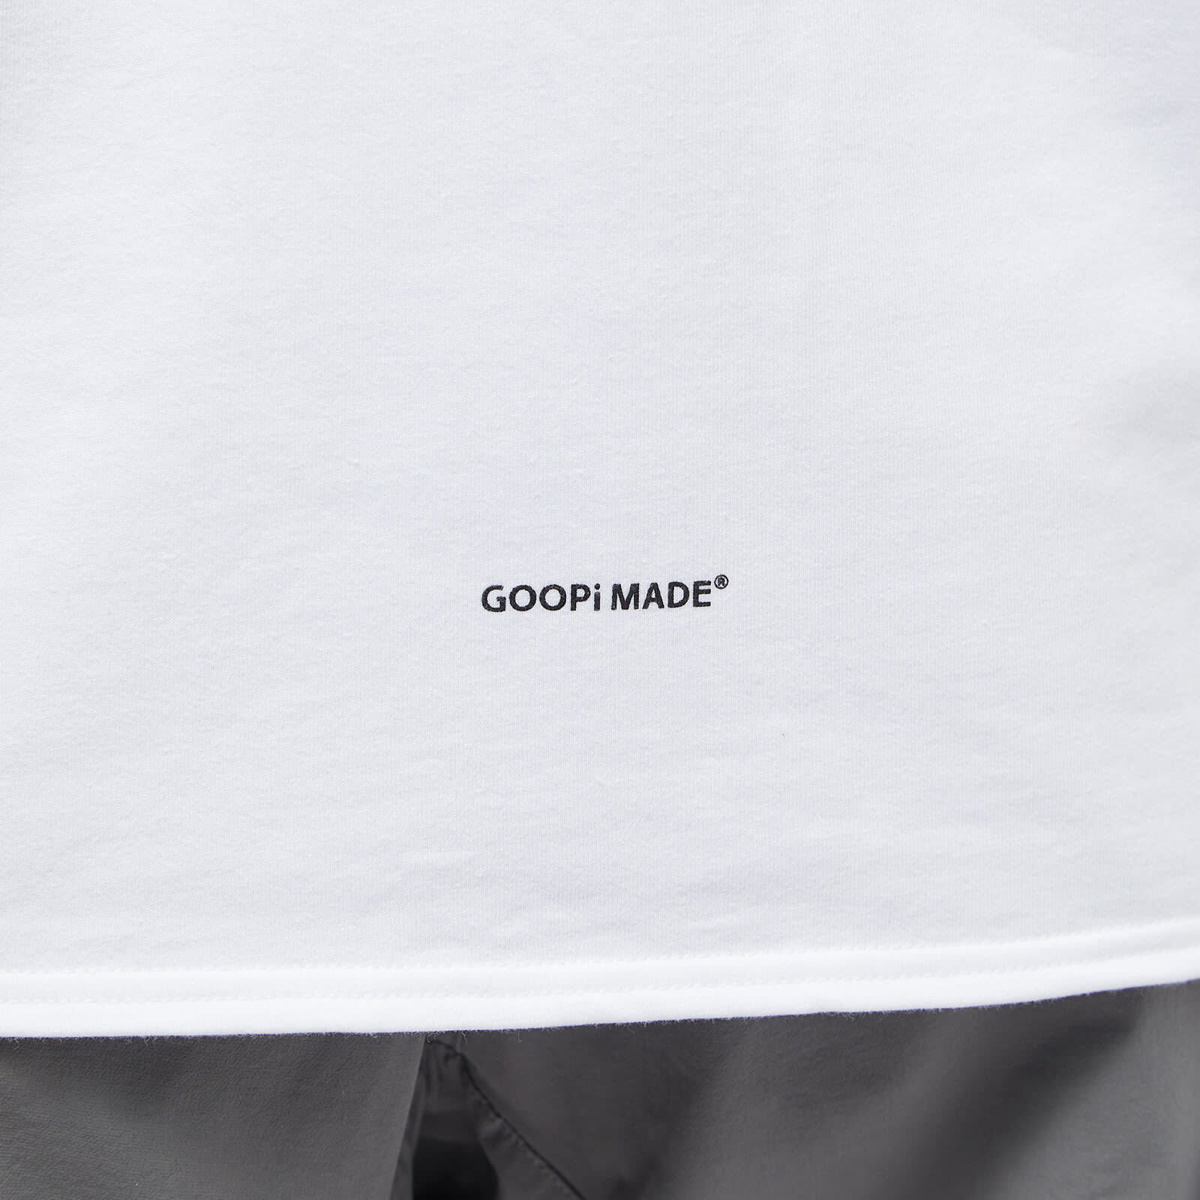 GOOPiMADE “Archetype-93” 3D Pocket T-Shirt